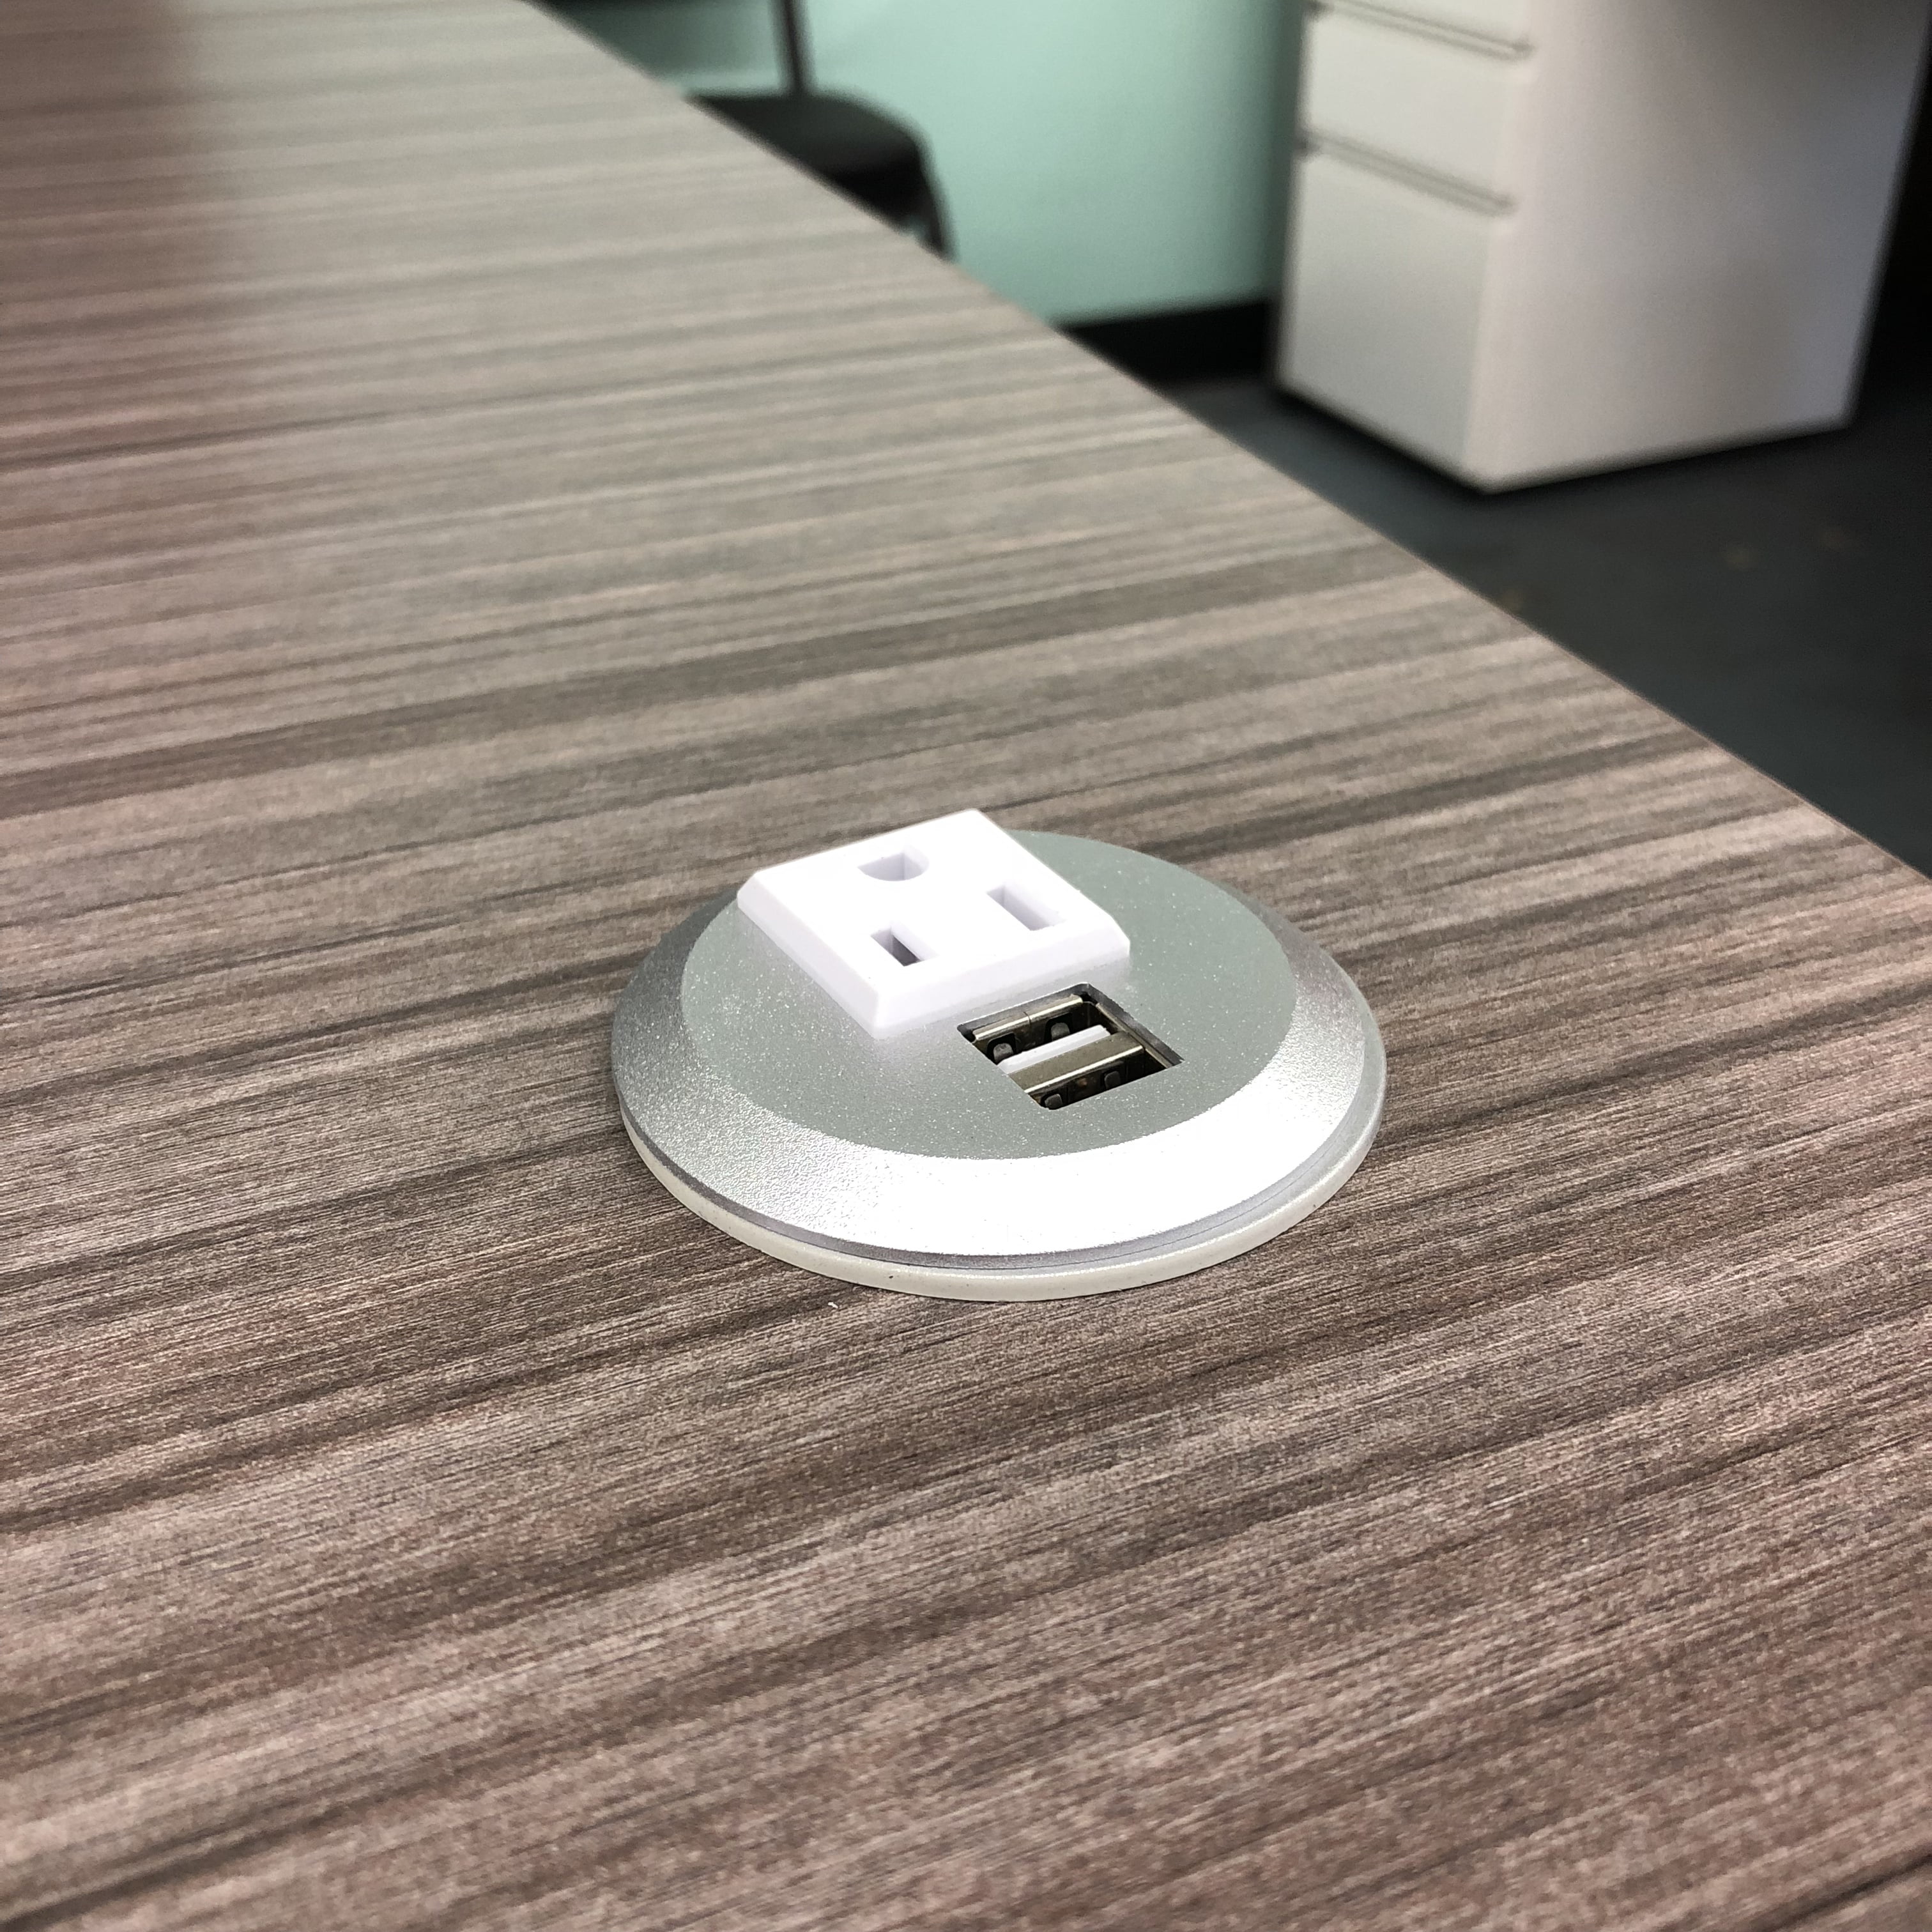 Desk Power Grommet,Hidden Power Socket,Desktop 2-Outlets 4 USB Ports Mountable into 3 1/8 inch Hole,Suitable for Conference Room Office Kitchen Table